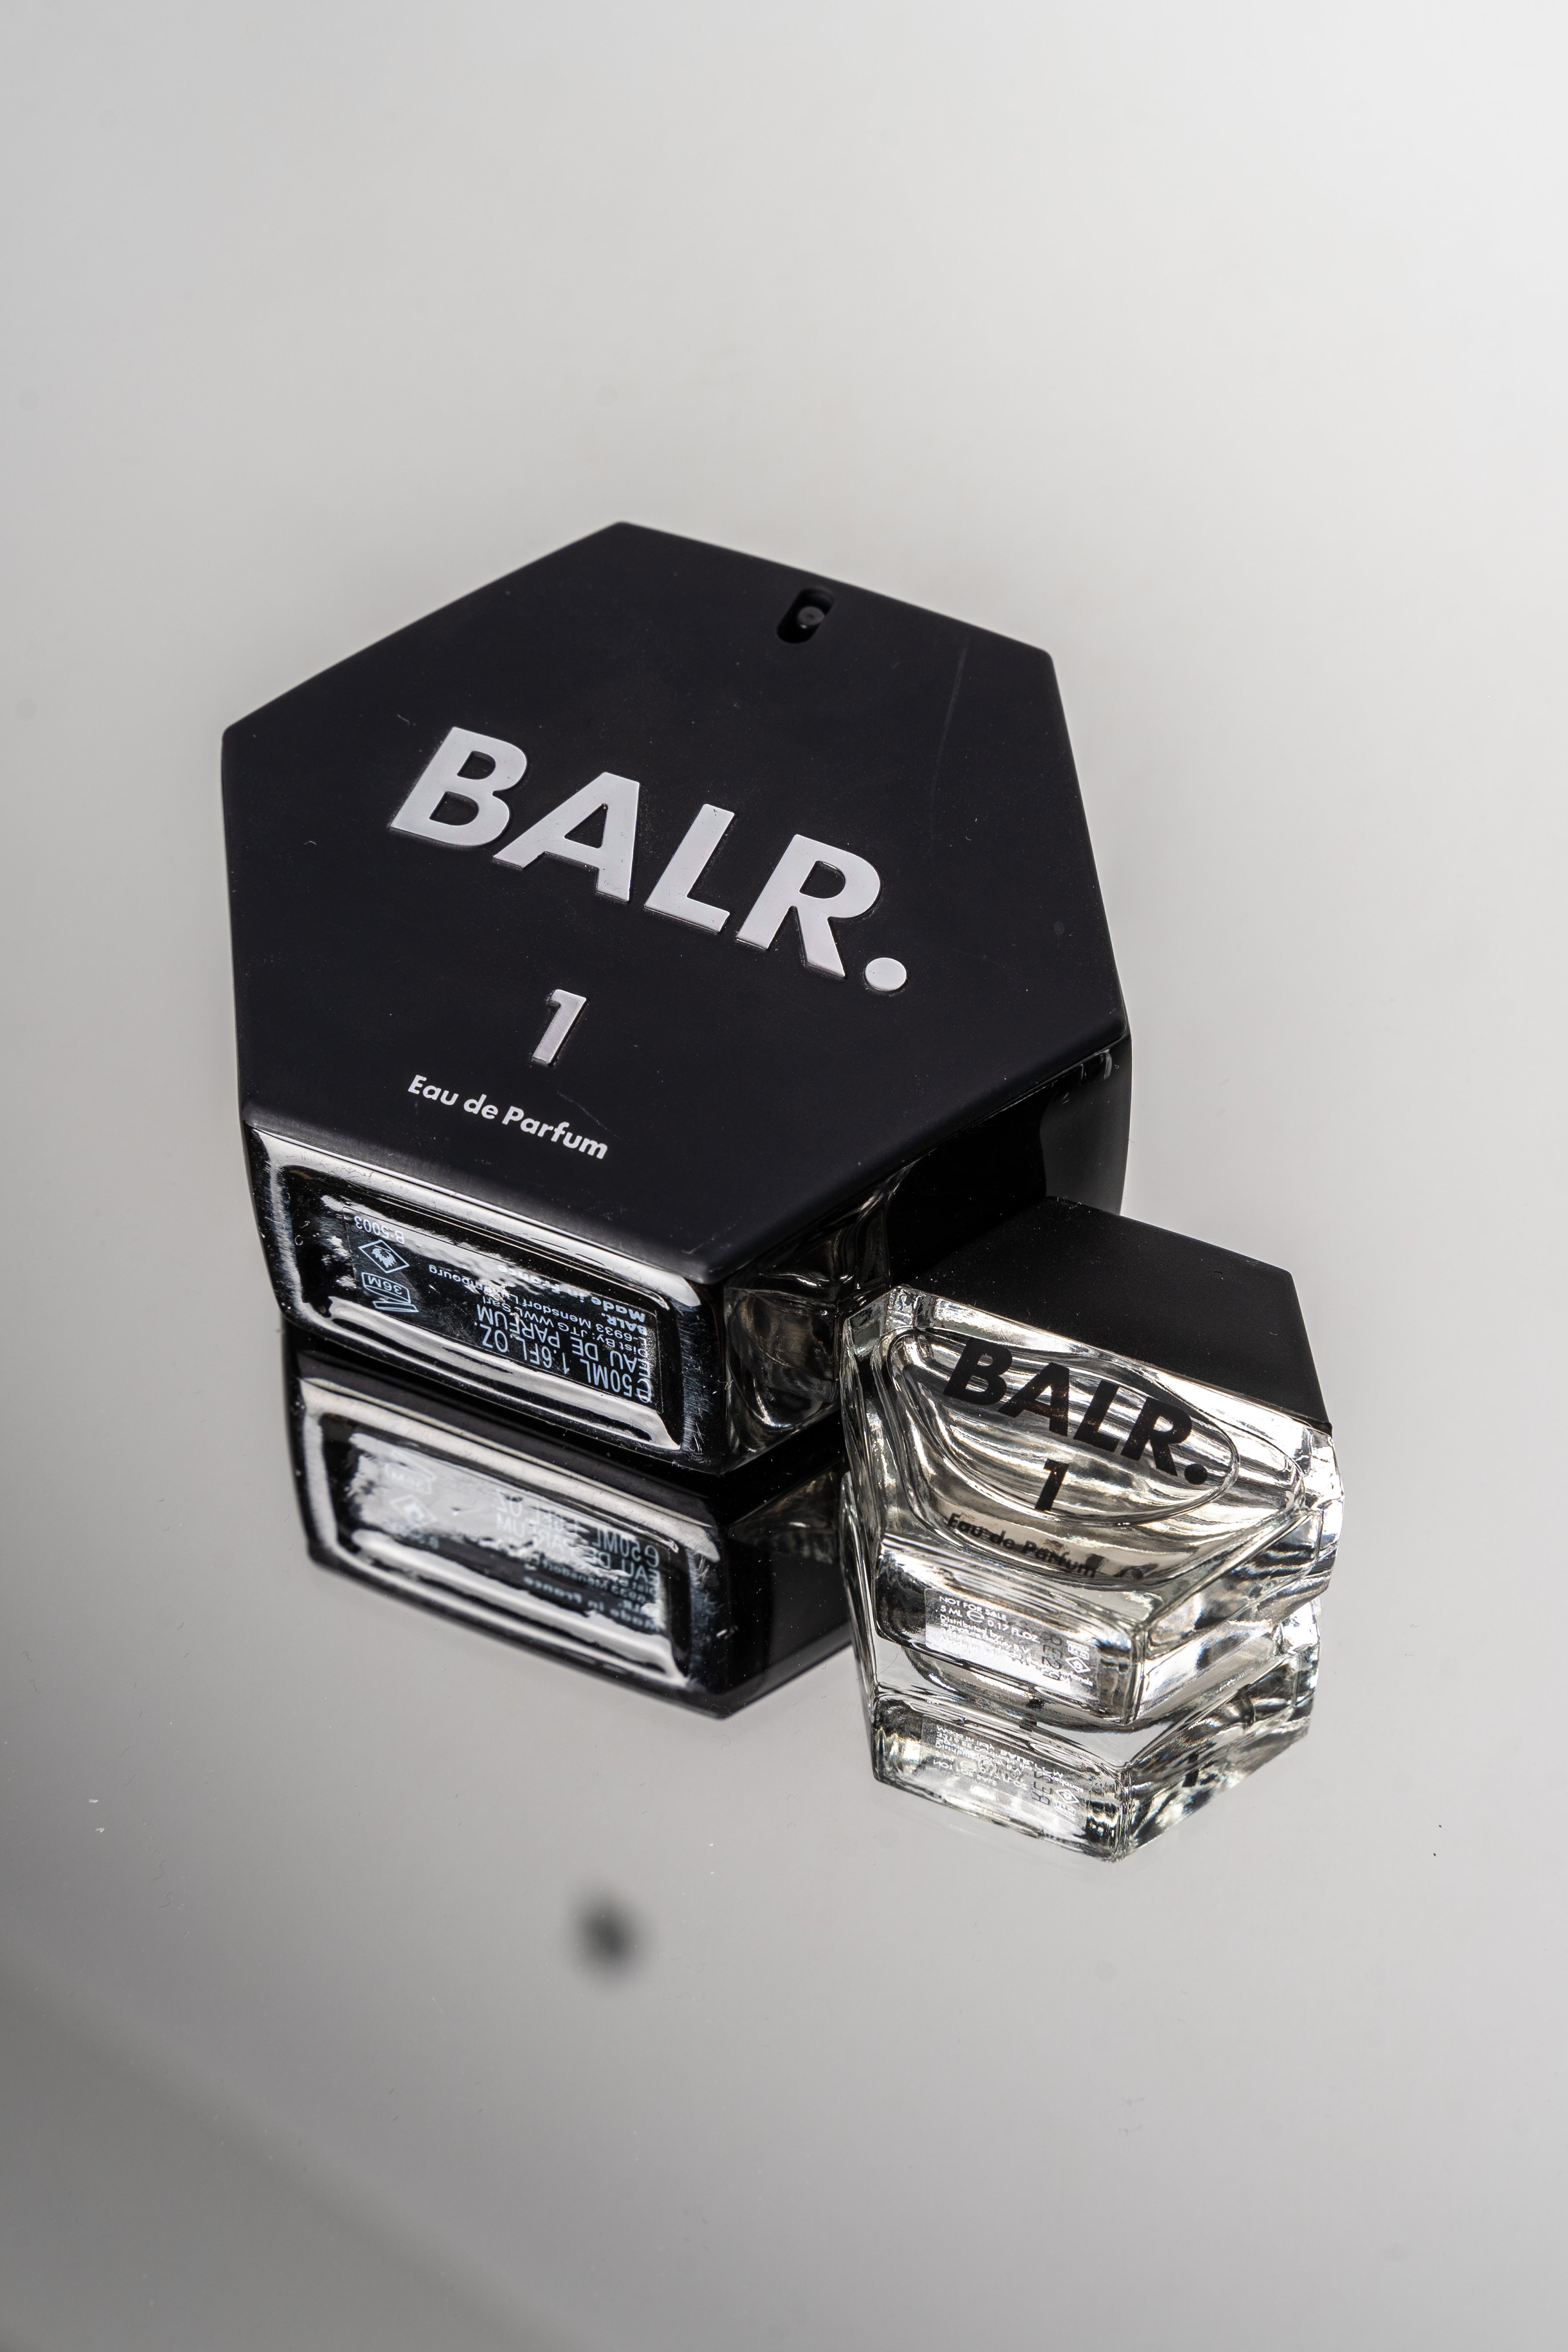 Balr-parfum-actie-december-6_cf489d5b-344c-4367-bb61-2640445797be.jpg